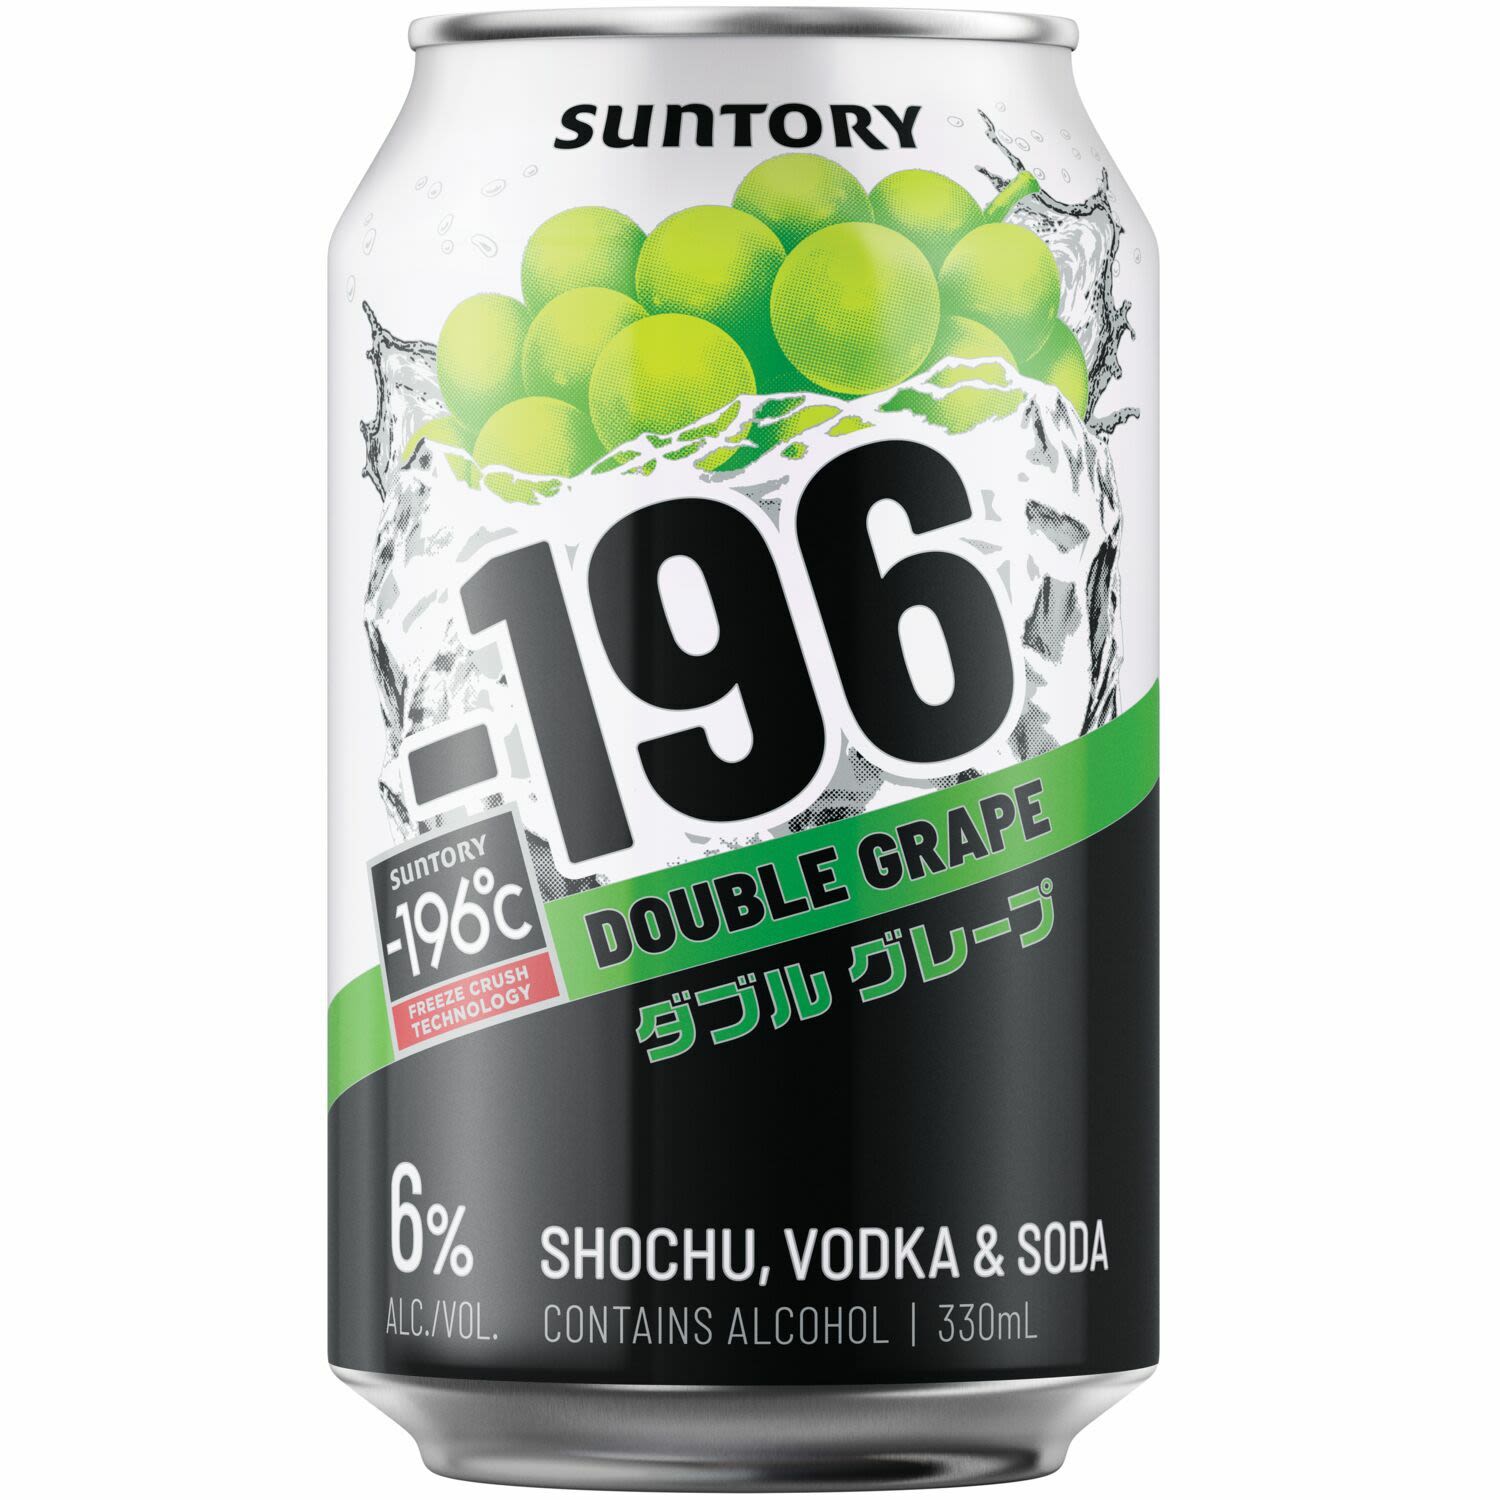 Suntory -196 Double Grape Can 330mL 